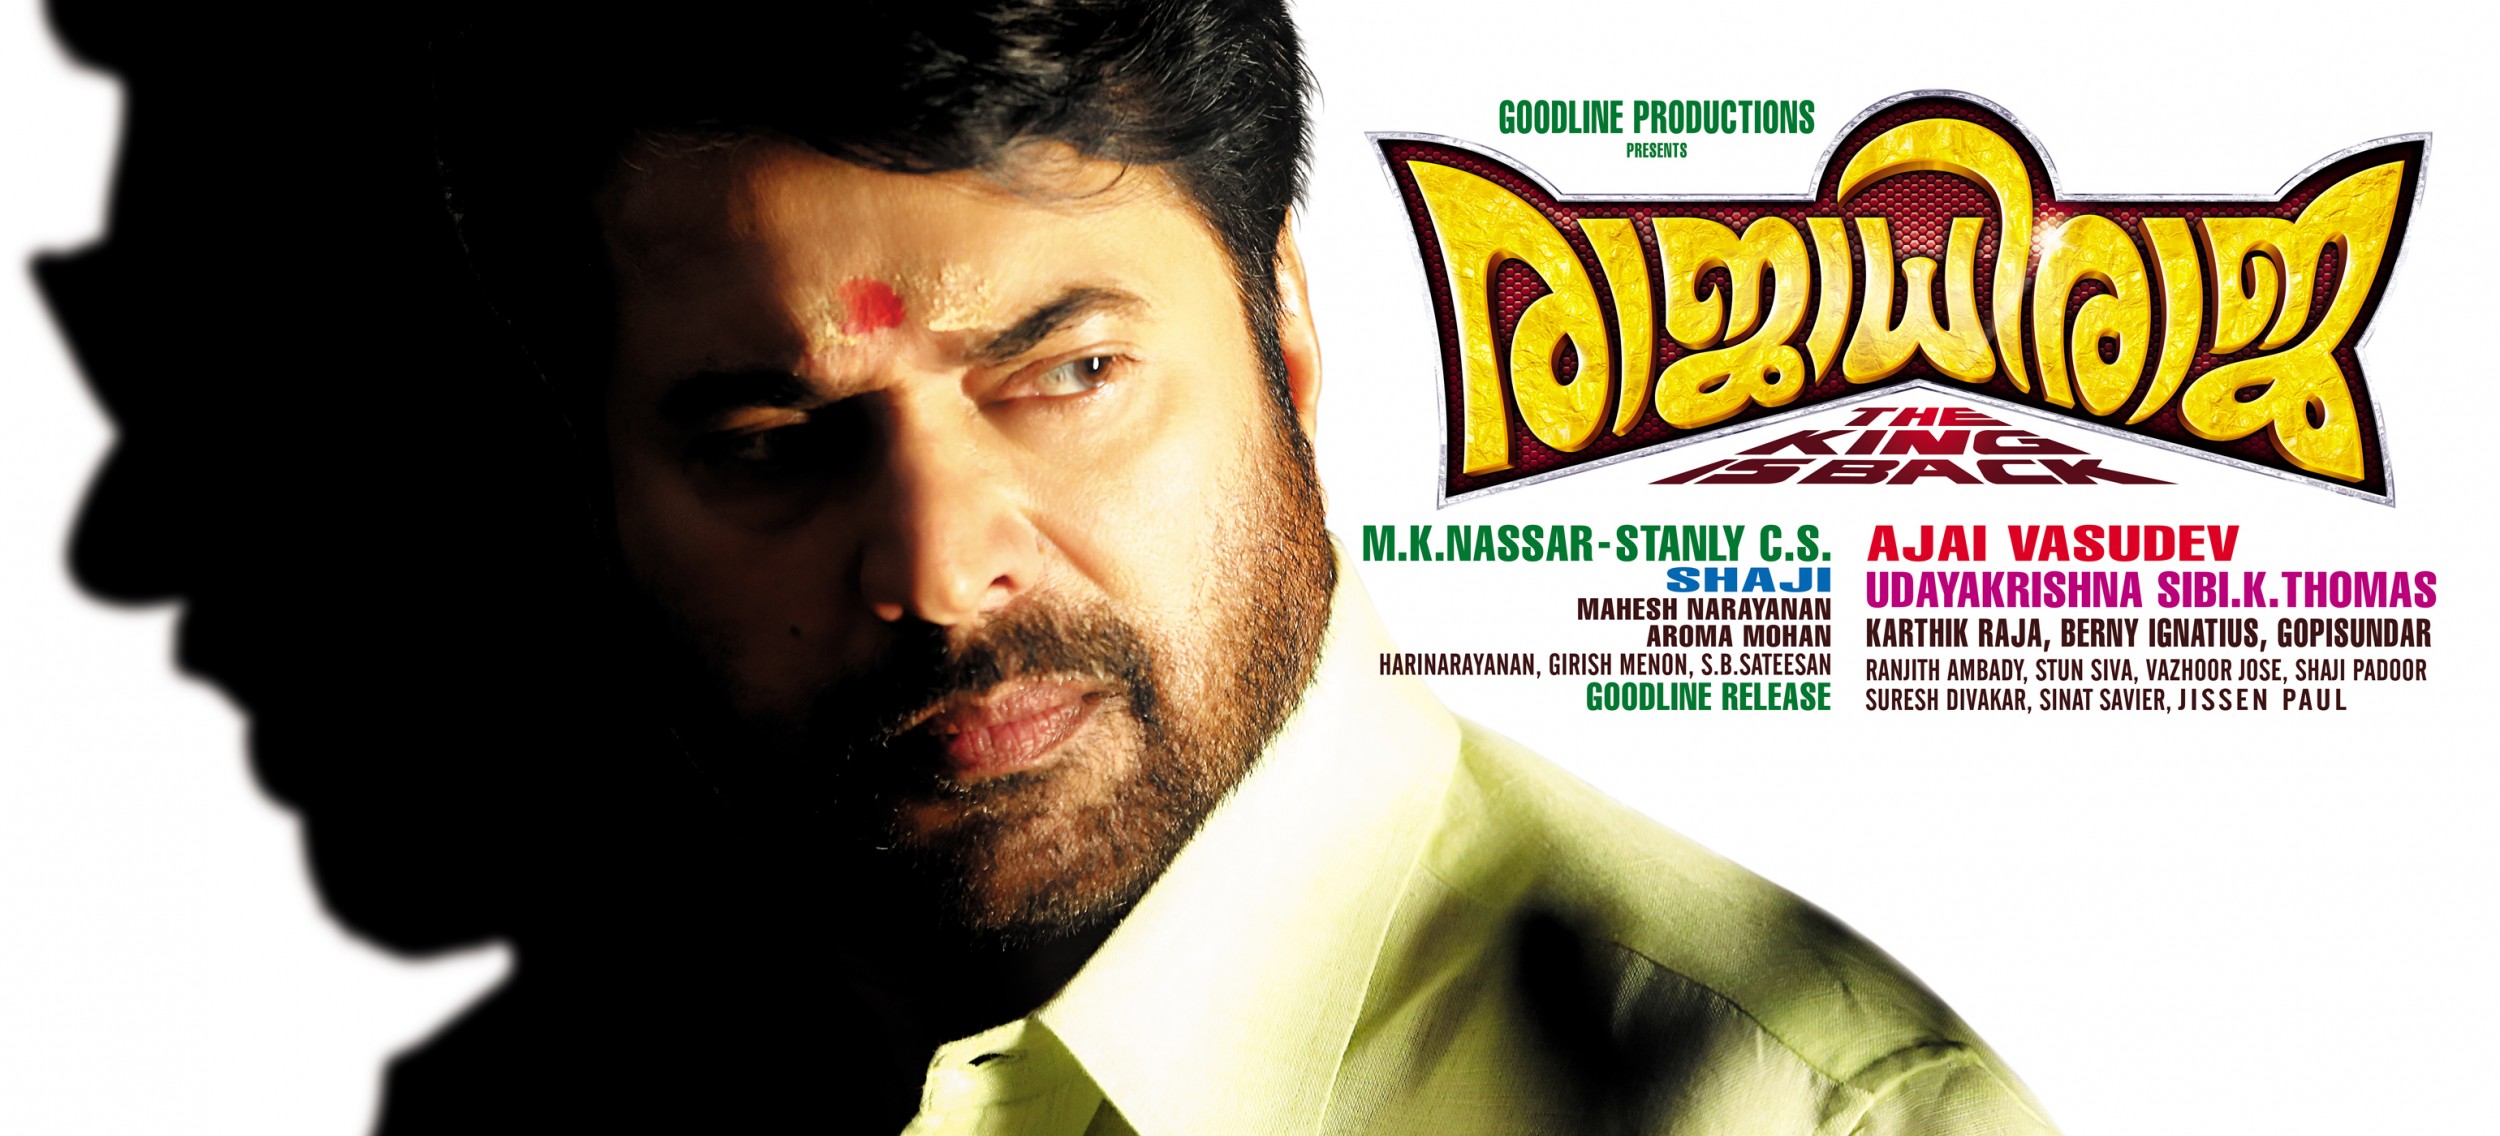 Mega Sized Movie Poster Image for RajadhiRaja (#3 of 3)